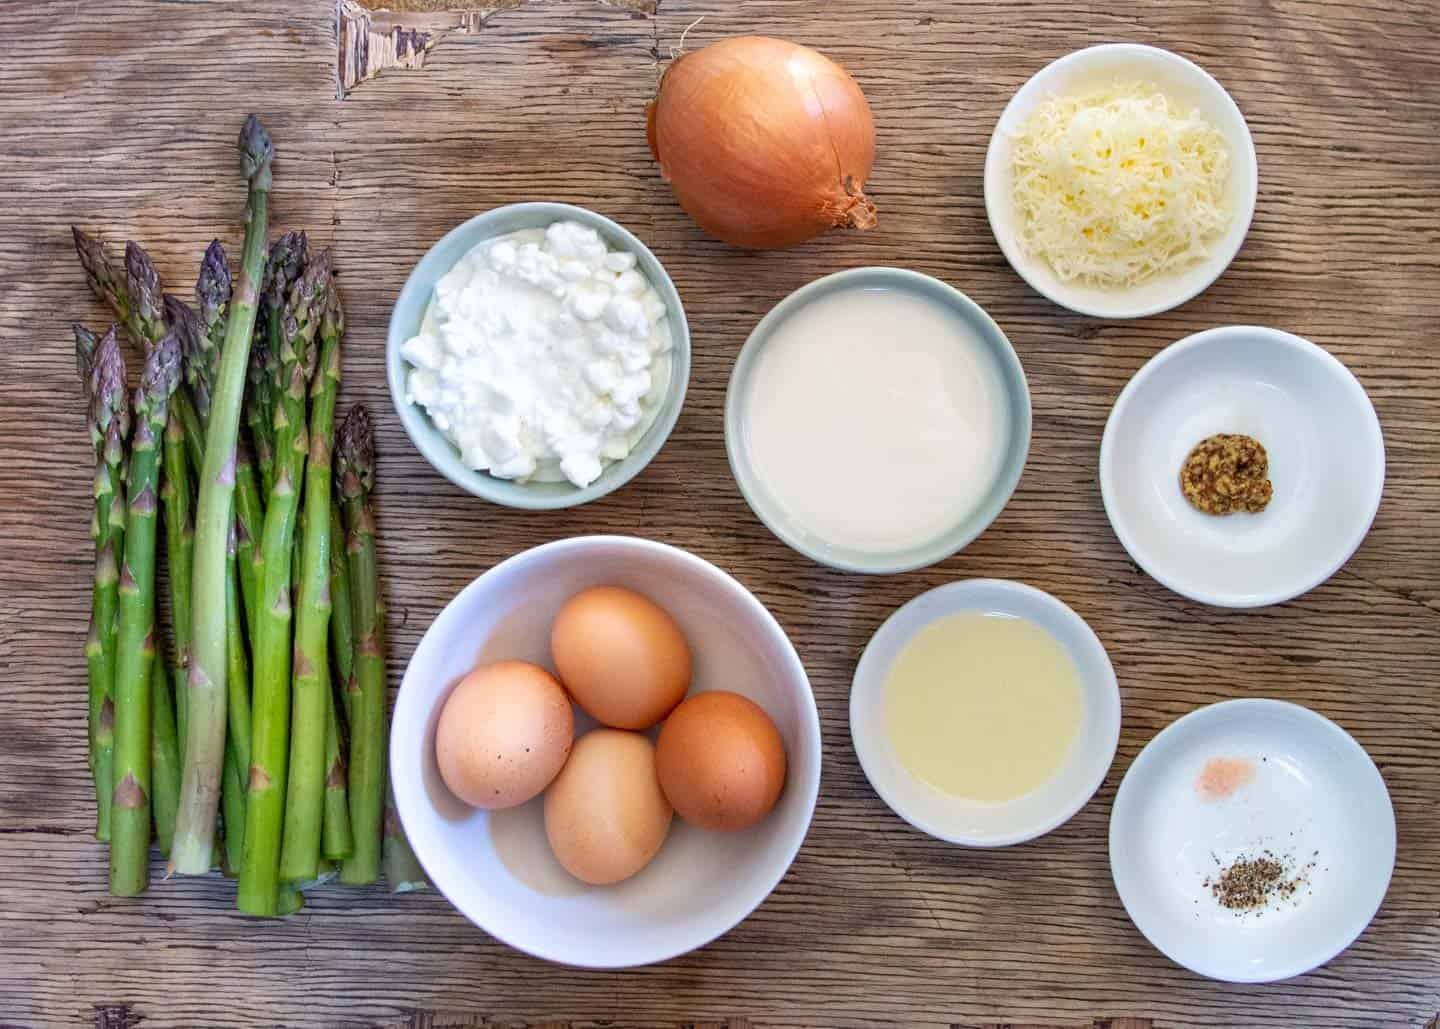 Ingredients for Crustless Asparagus Quiche